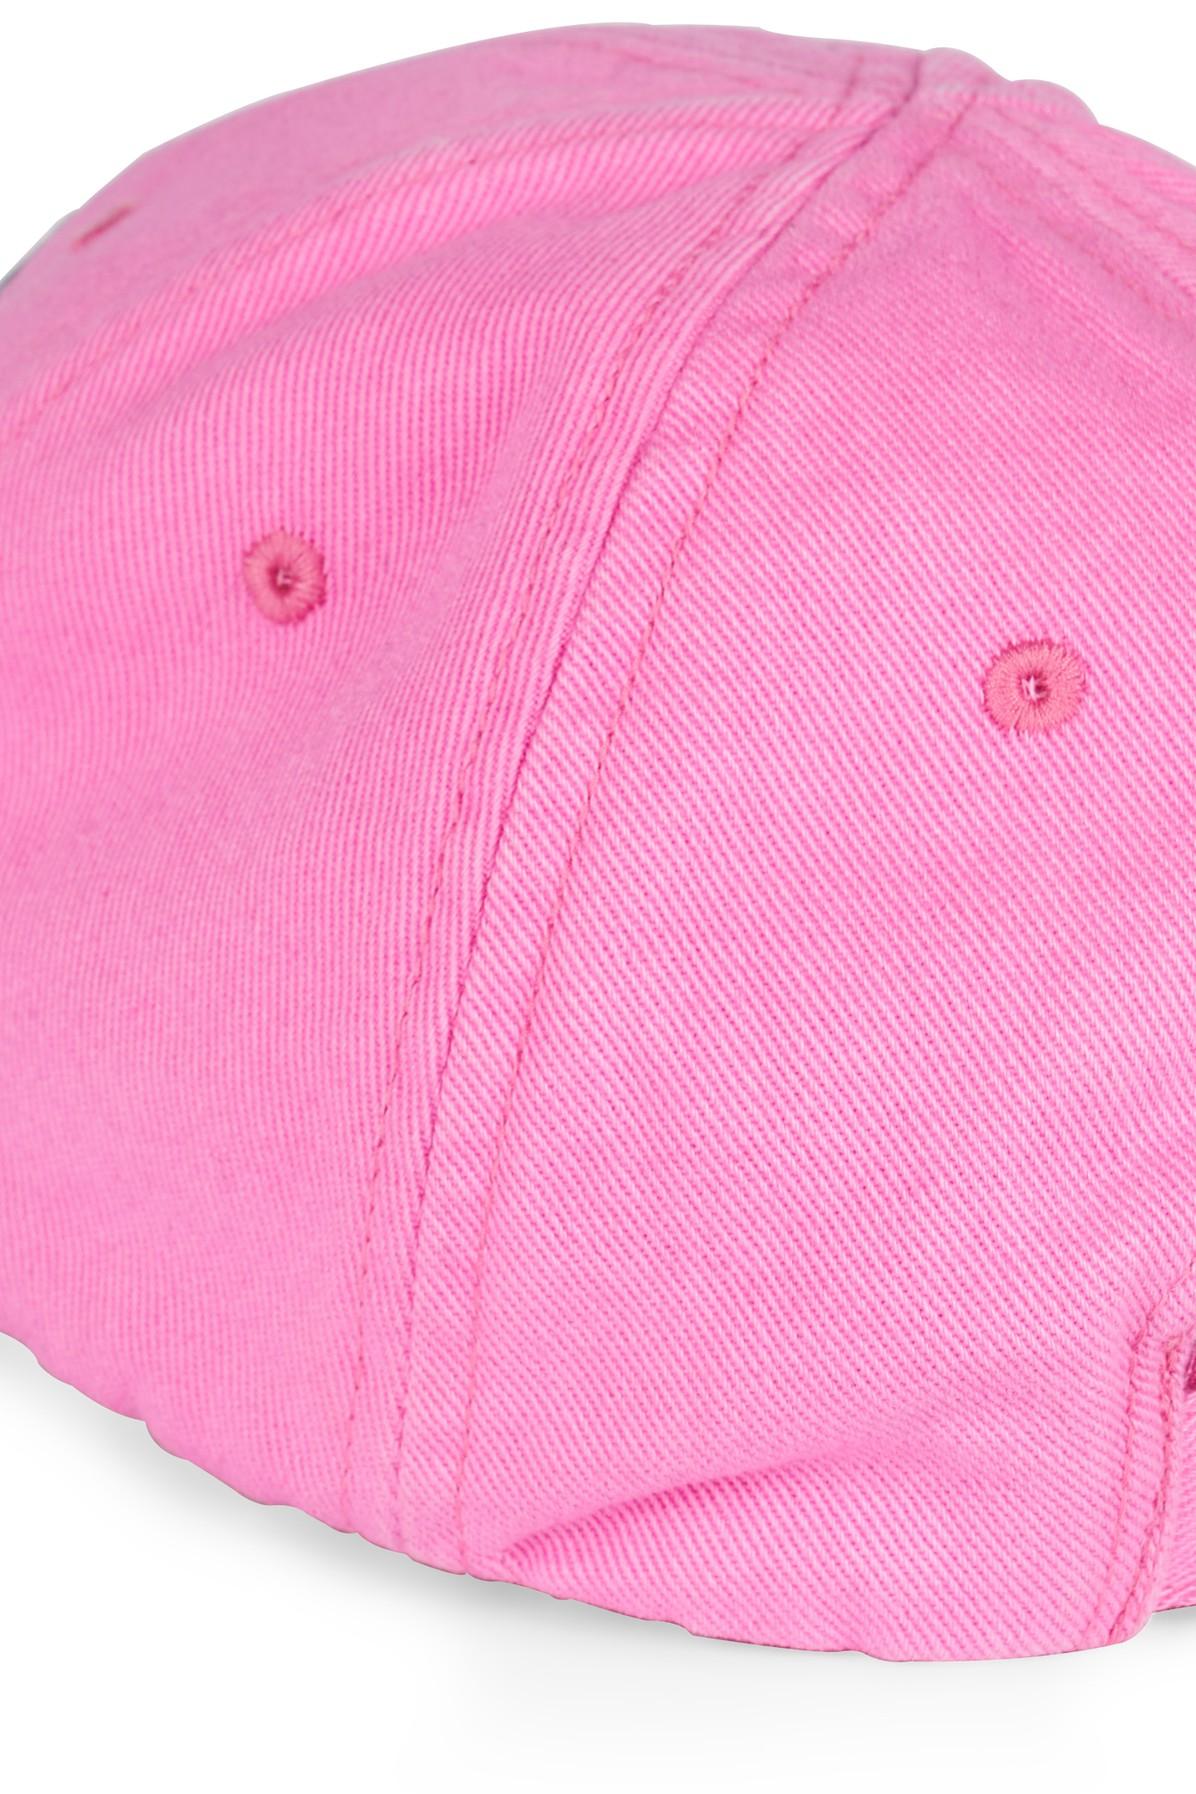 Balenciaga Gay Pride Hat in Light_pink (Pink) - Lyst